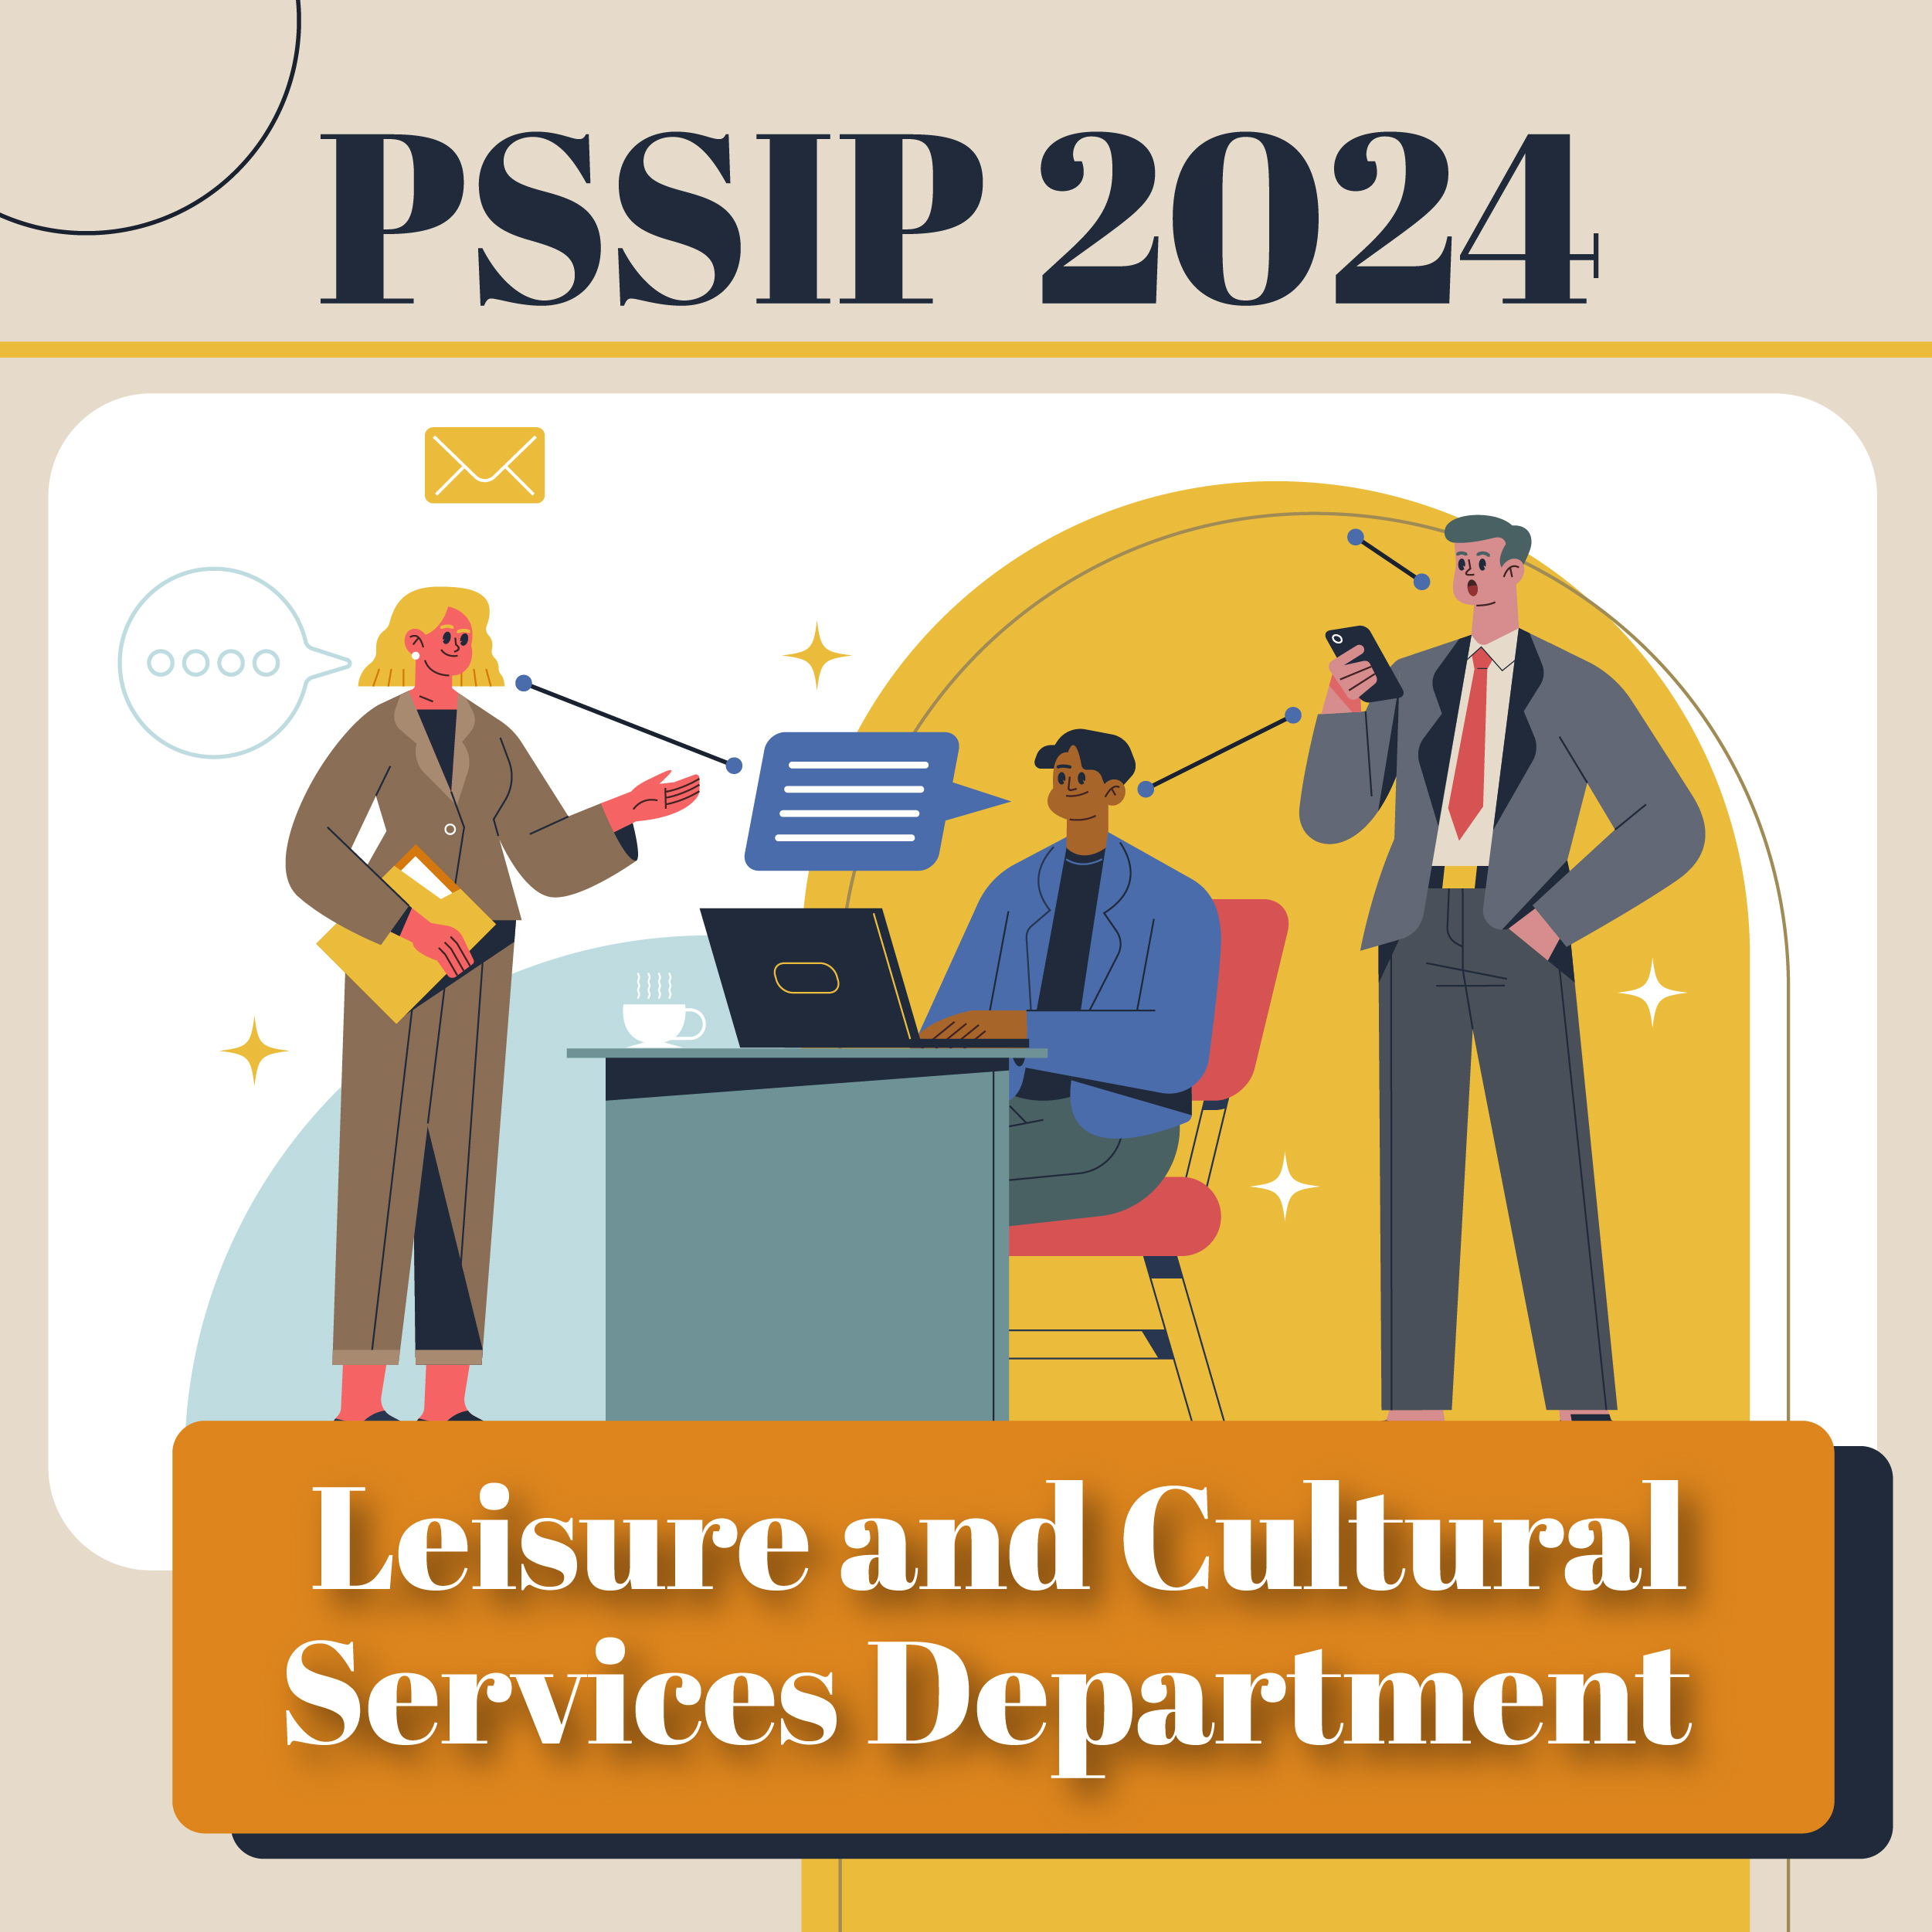 PSSIP2024 – Leisure Services Branch, LCSD